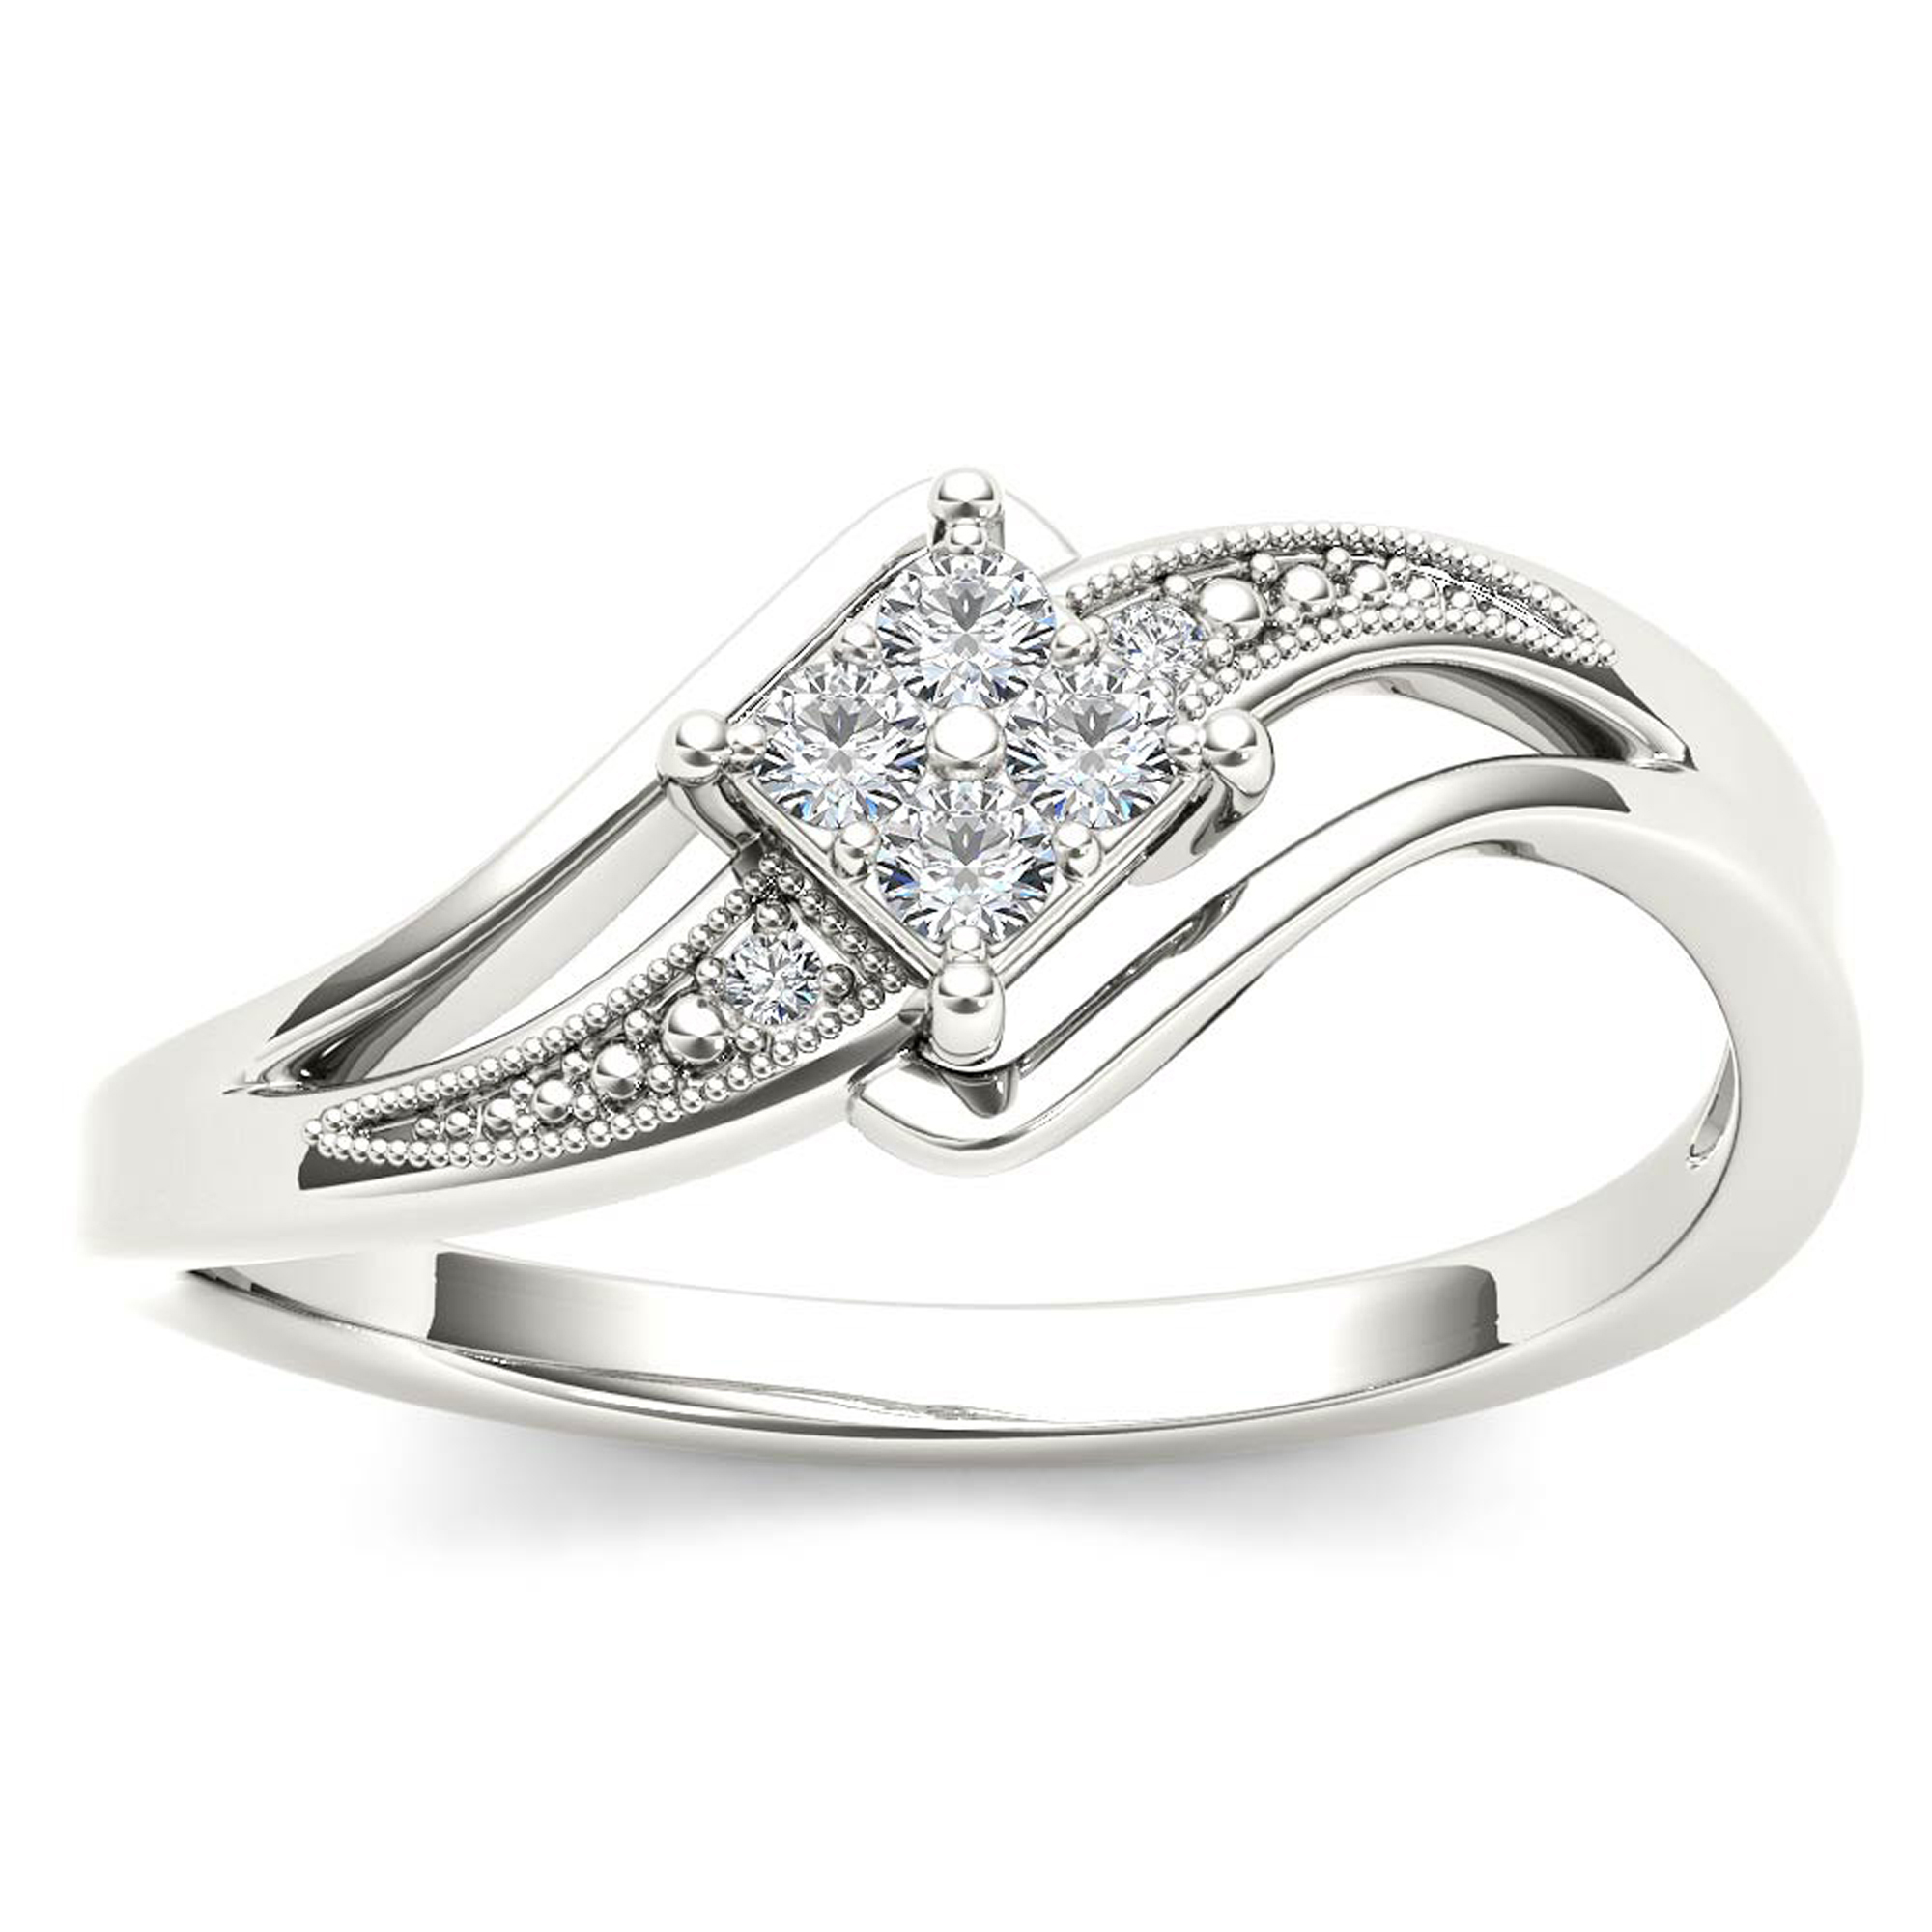 Amouria 10k White Gold 1/10 Ct Round Cut Diamond Bypass Engagement Ring (HI, I2)